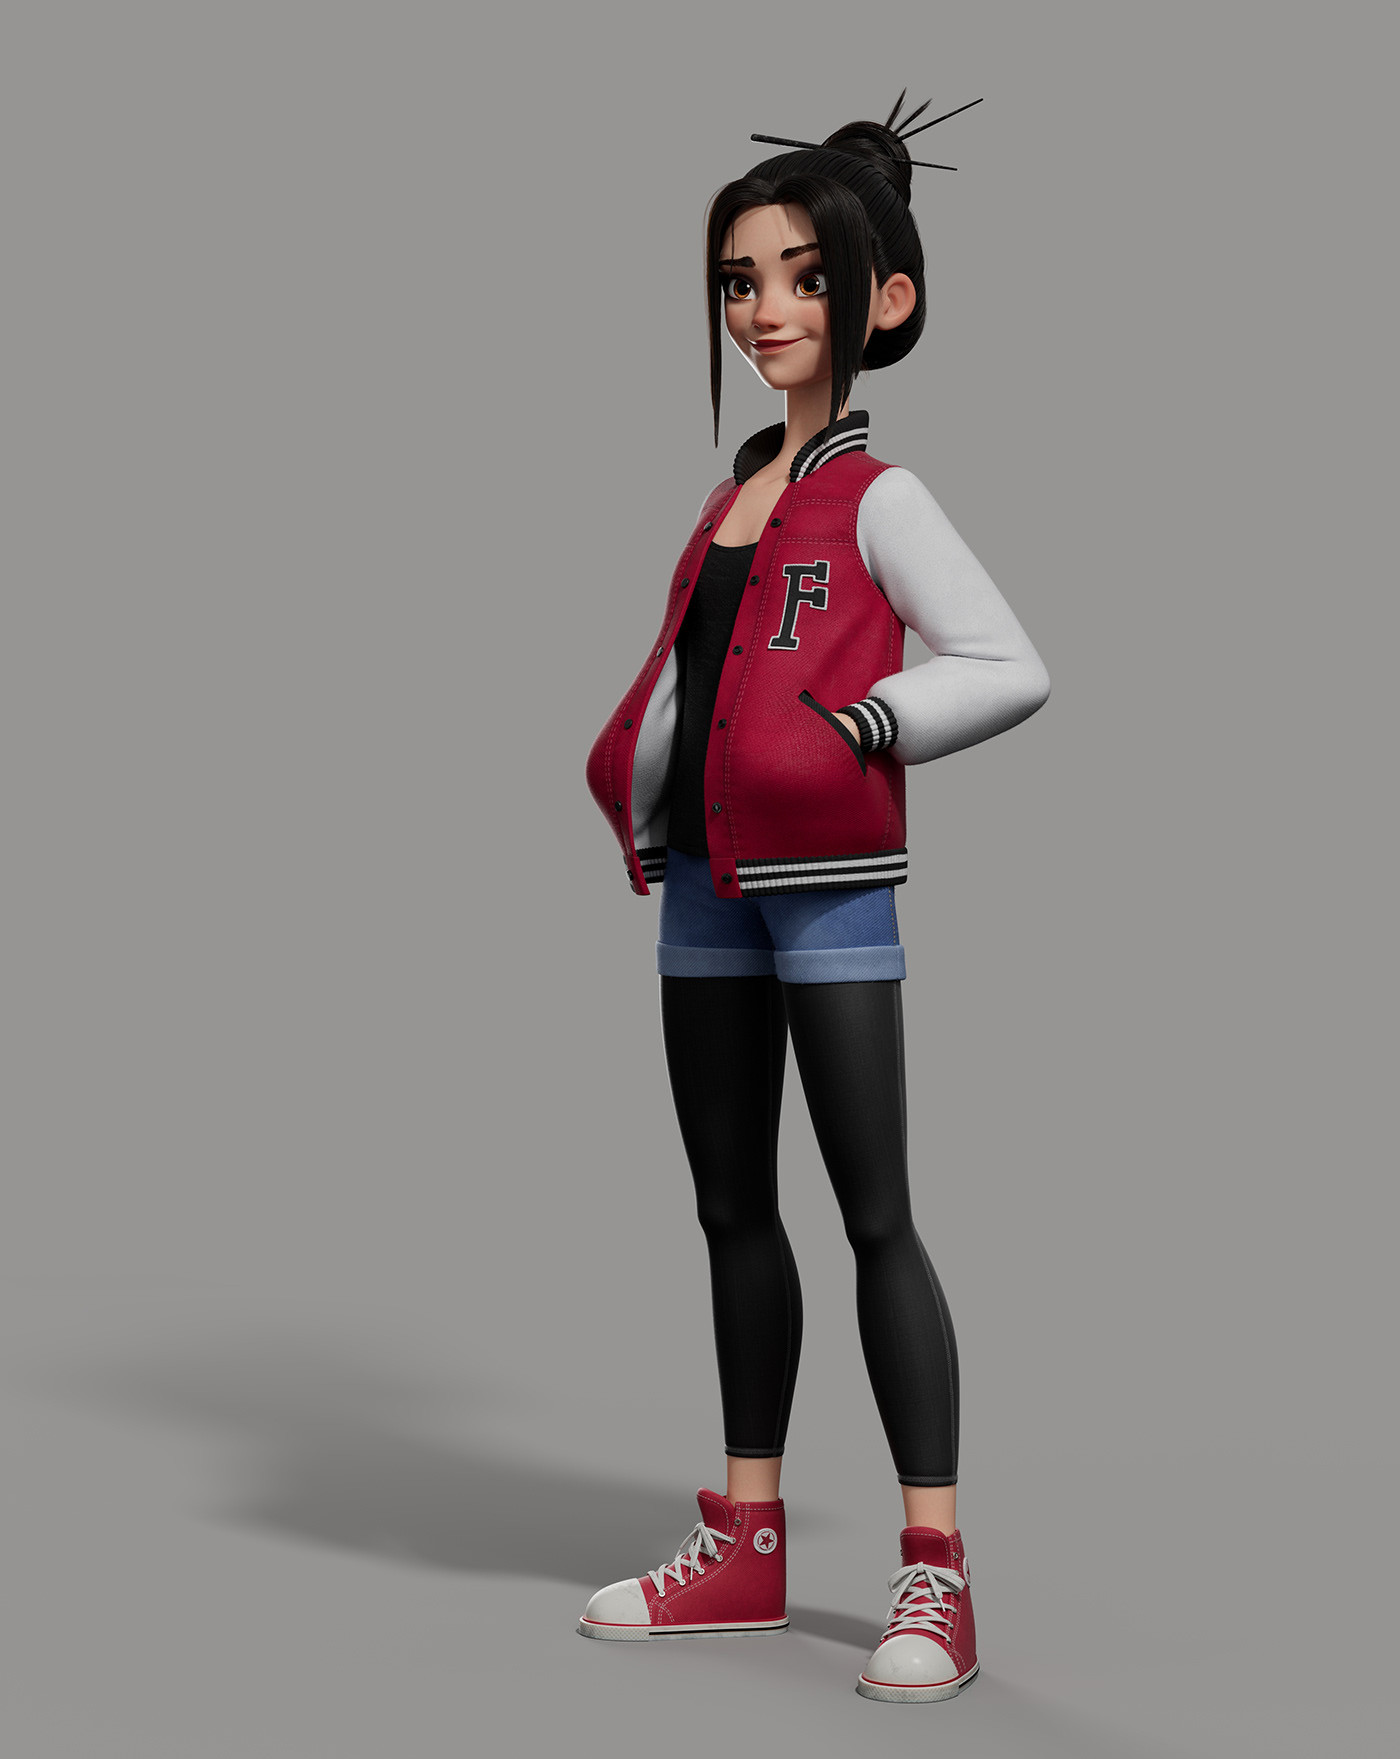 cartoon 3D 3dmodeling Render Character design  character modeling